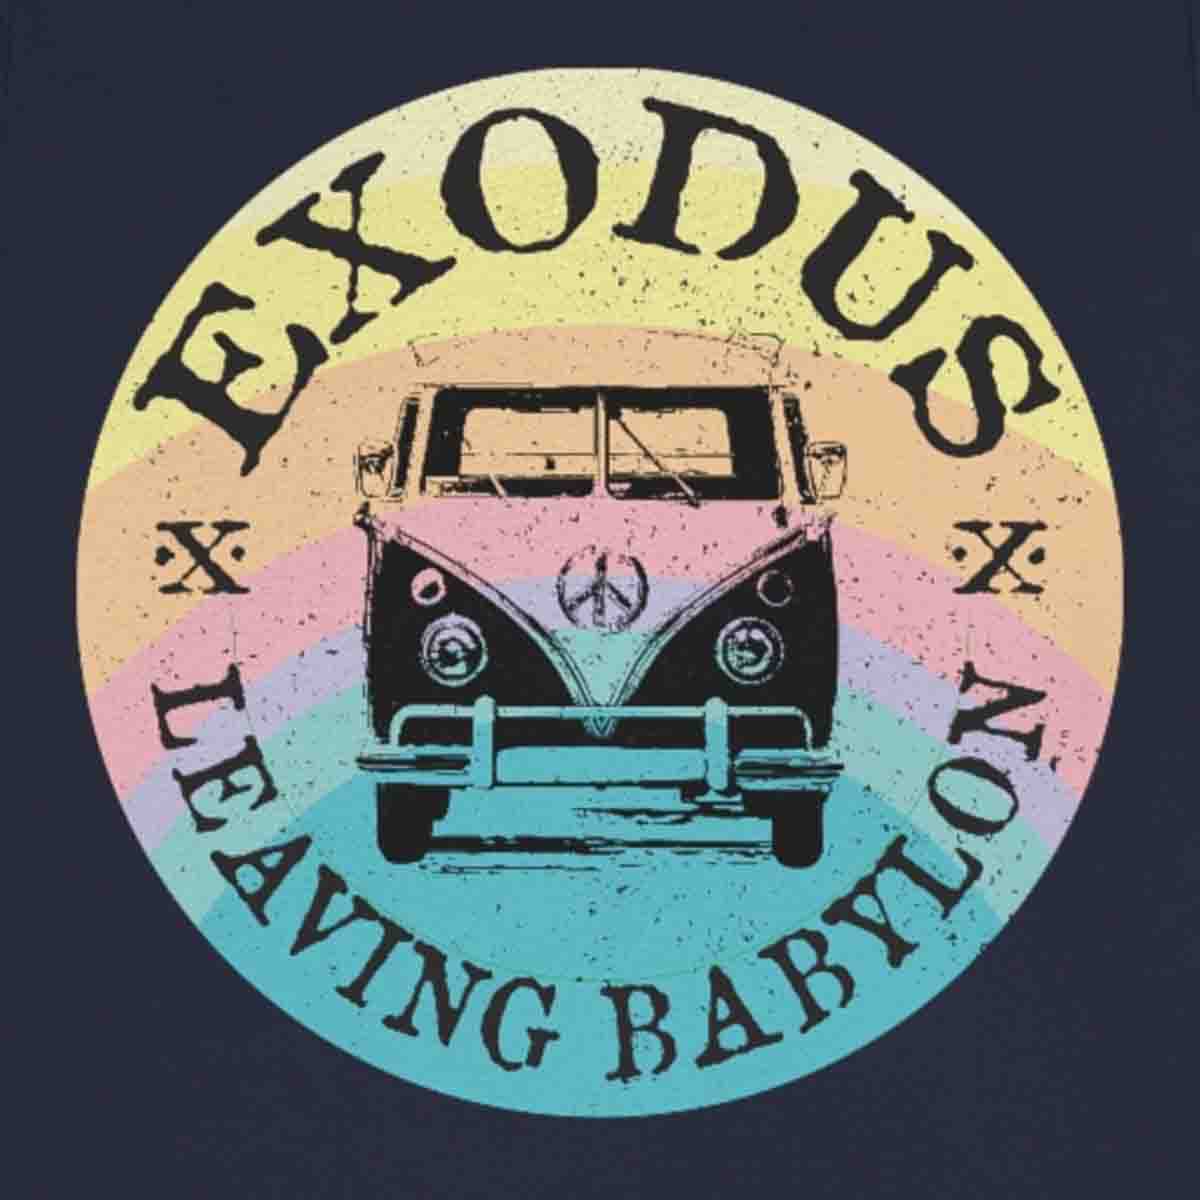 Exodus Premium T-Shirt, Leaving, Peace Bus